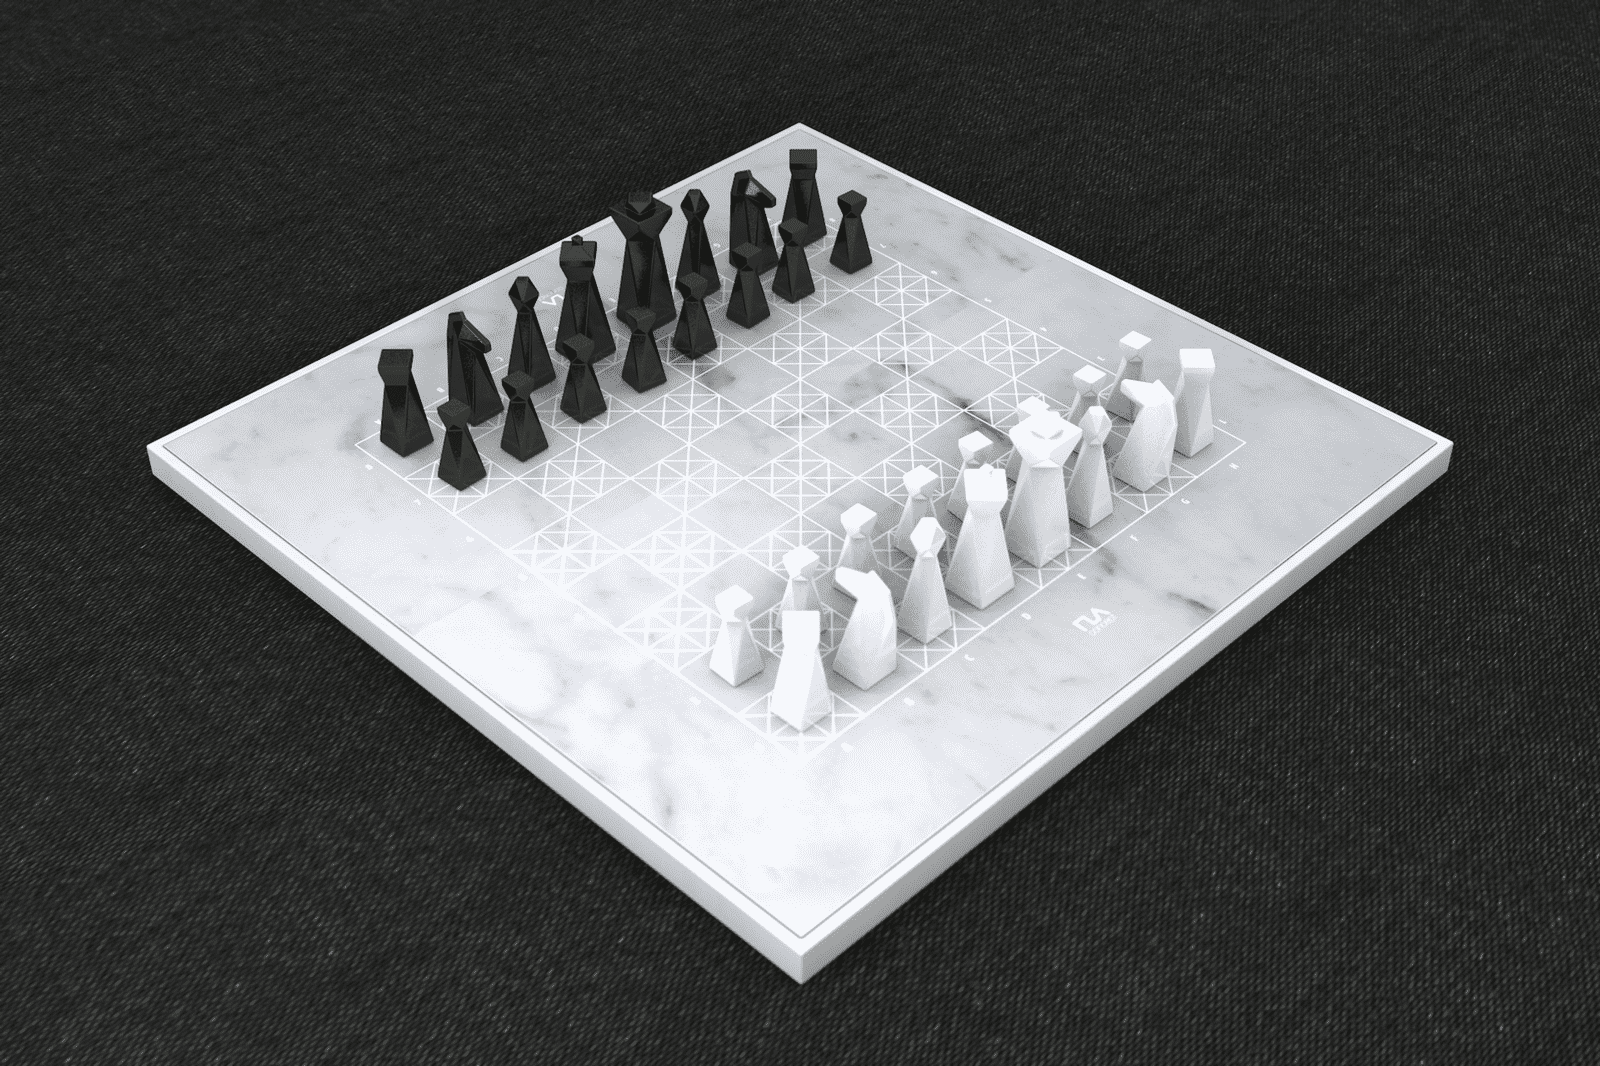 Wood Chess Set - Luxury - Modern Games